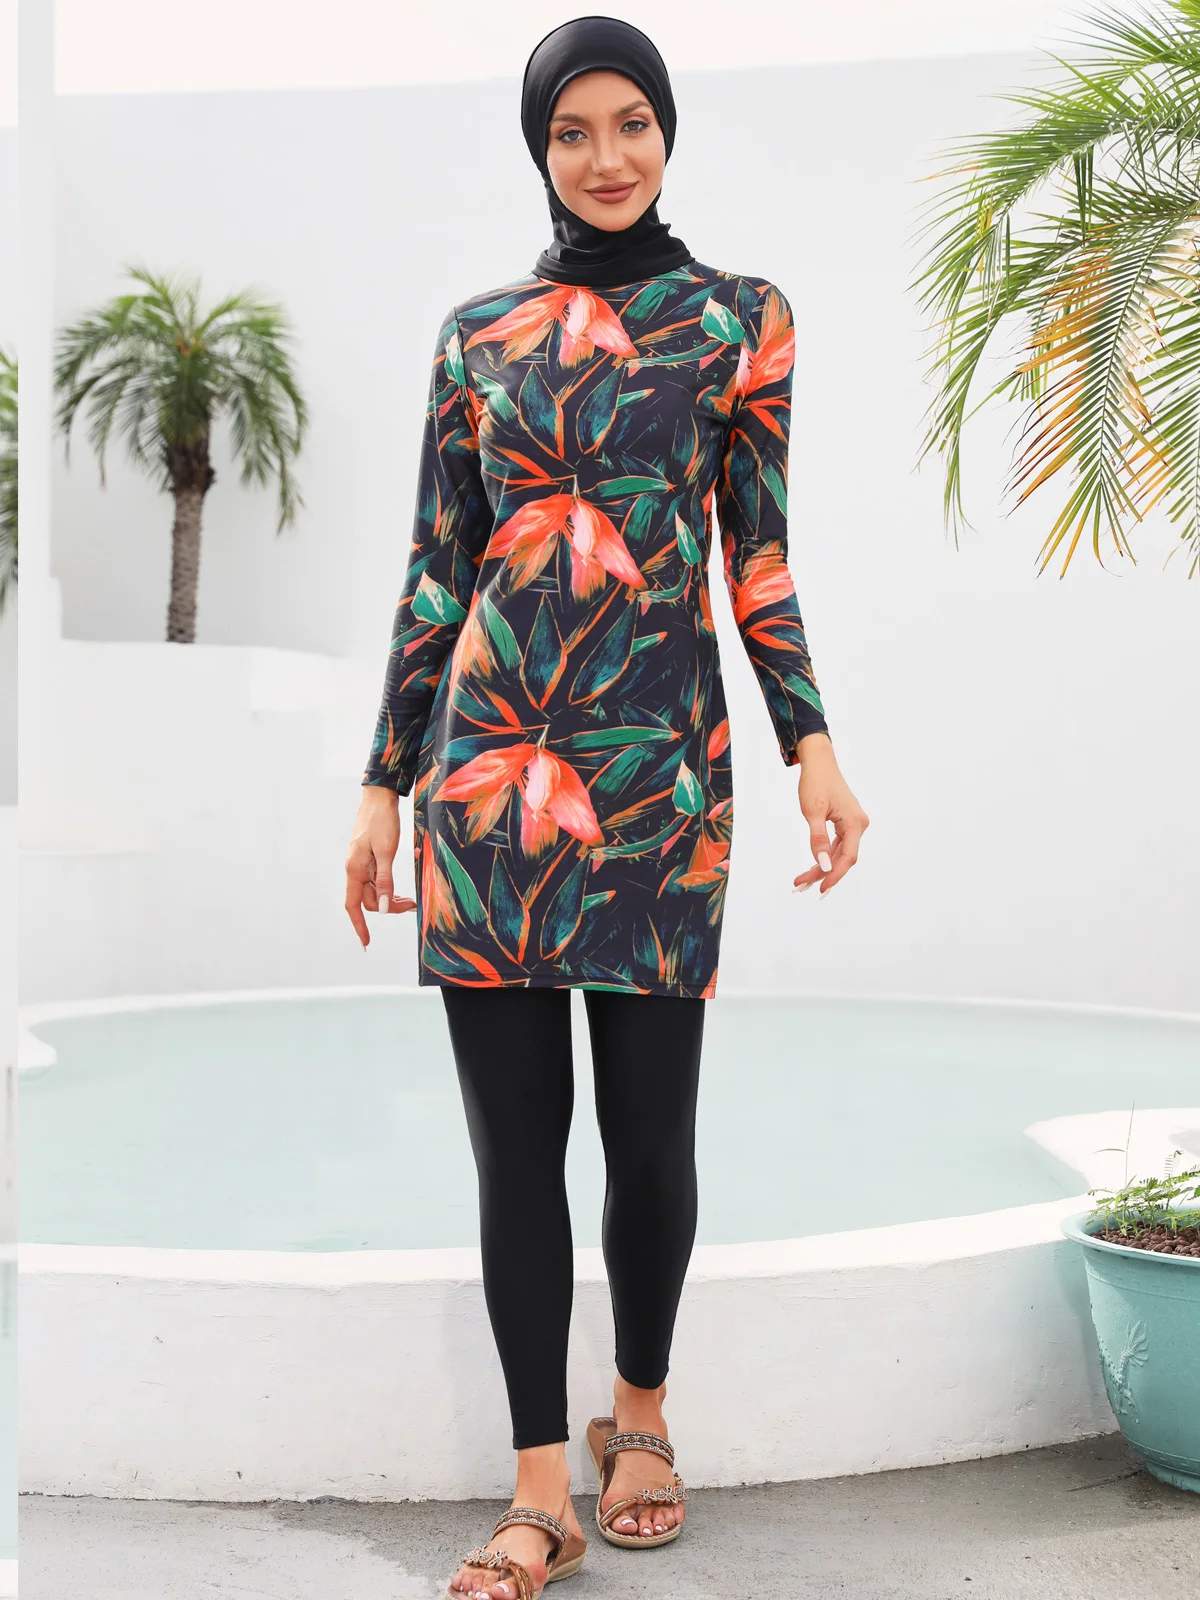 Women Muslim Swimwear Maple Leaf Printing Lslamic Clothes Hijab 3 Pcs Long Sleeves Sport Swimsuit Burkinis Bathing Suit